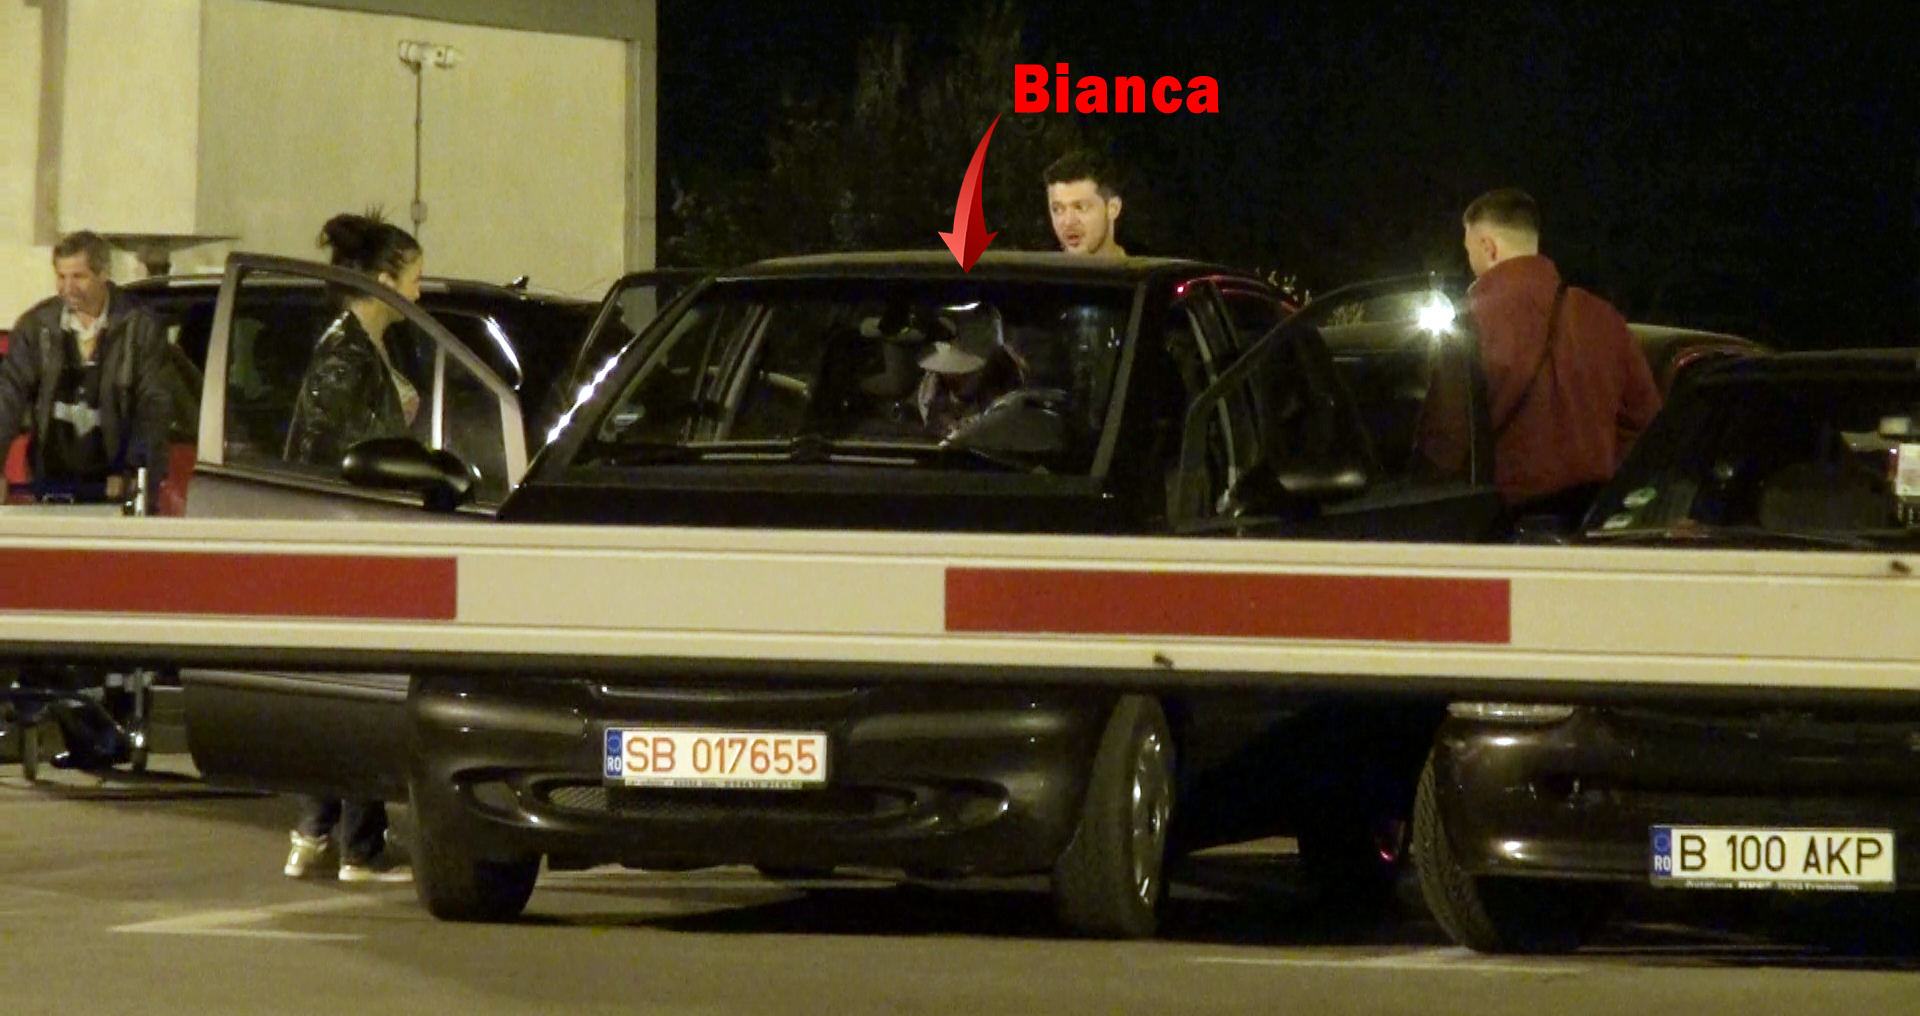 Bianca a iesit din aeroport cu o sapca indesata pe cap si s-a urcat in viteza in masina, in timp ce Slav, jovial, a ramas la taclale cu amicii care venisera sa-i conduca acasa